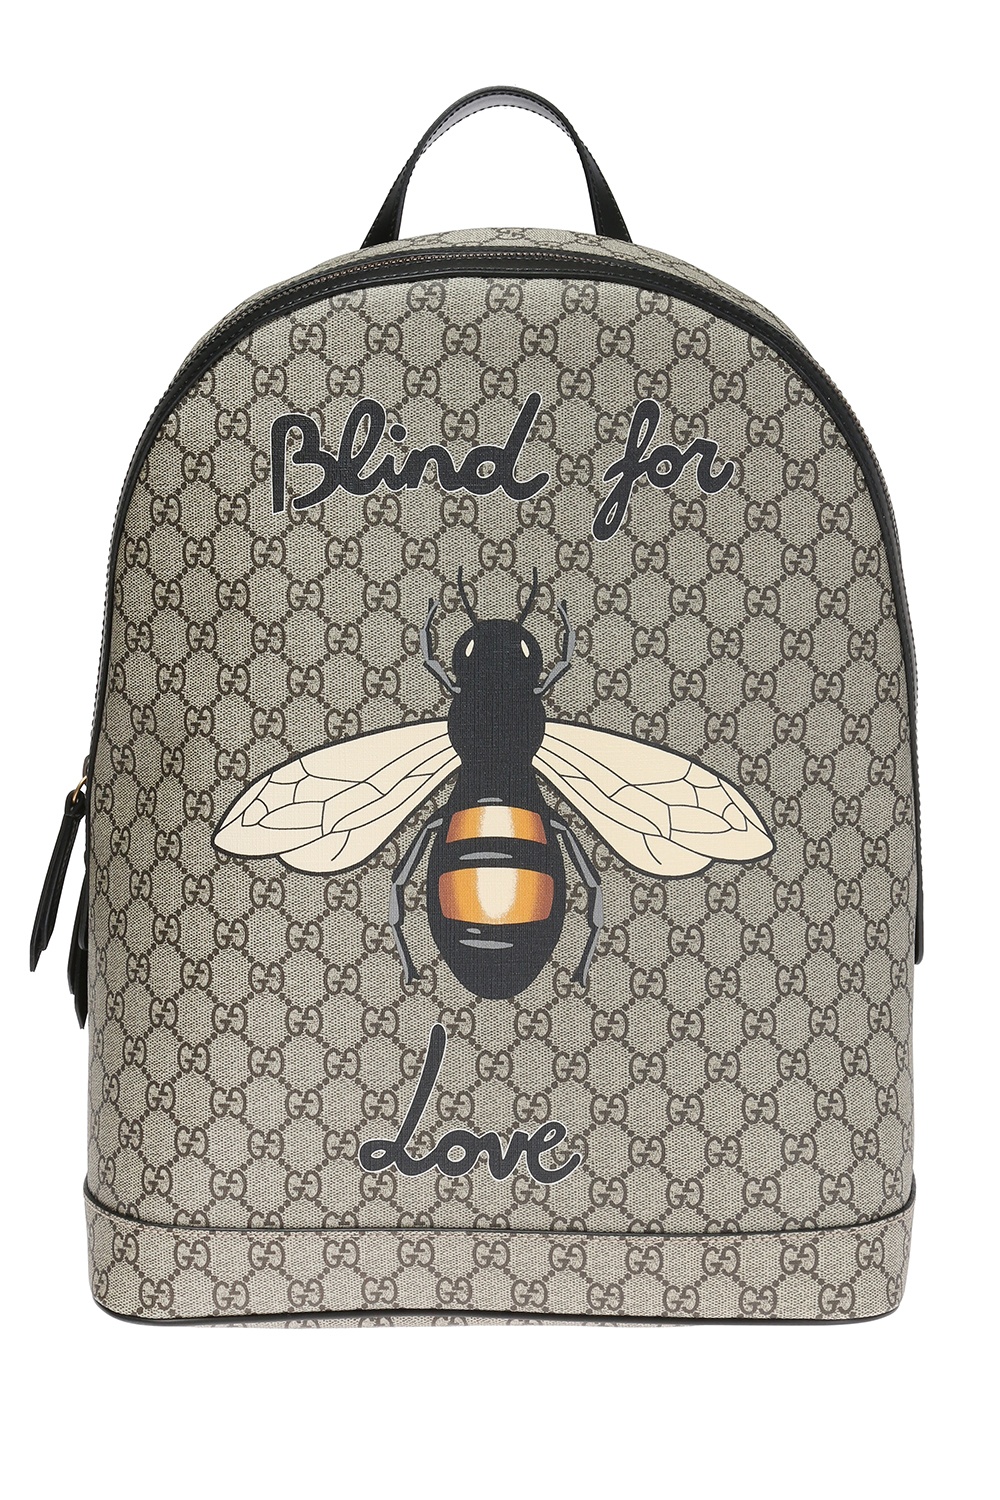 gucci backpack bumblebee